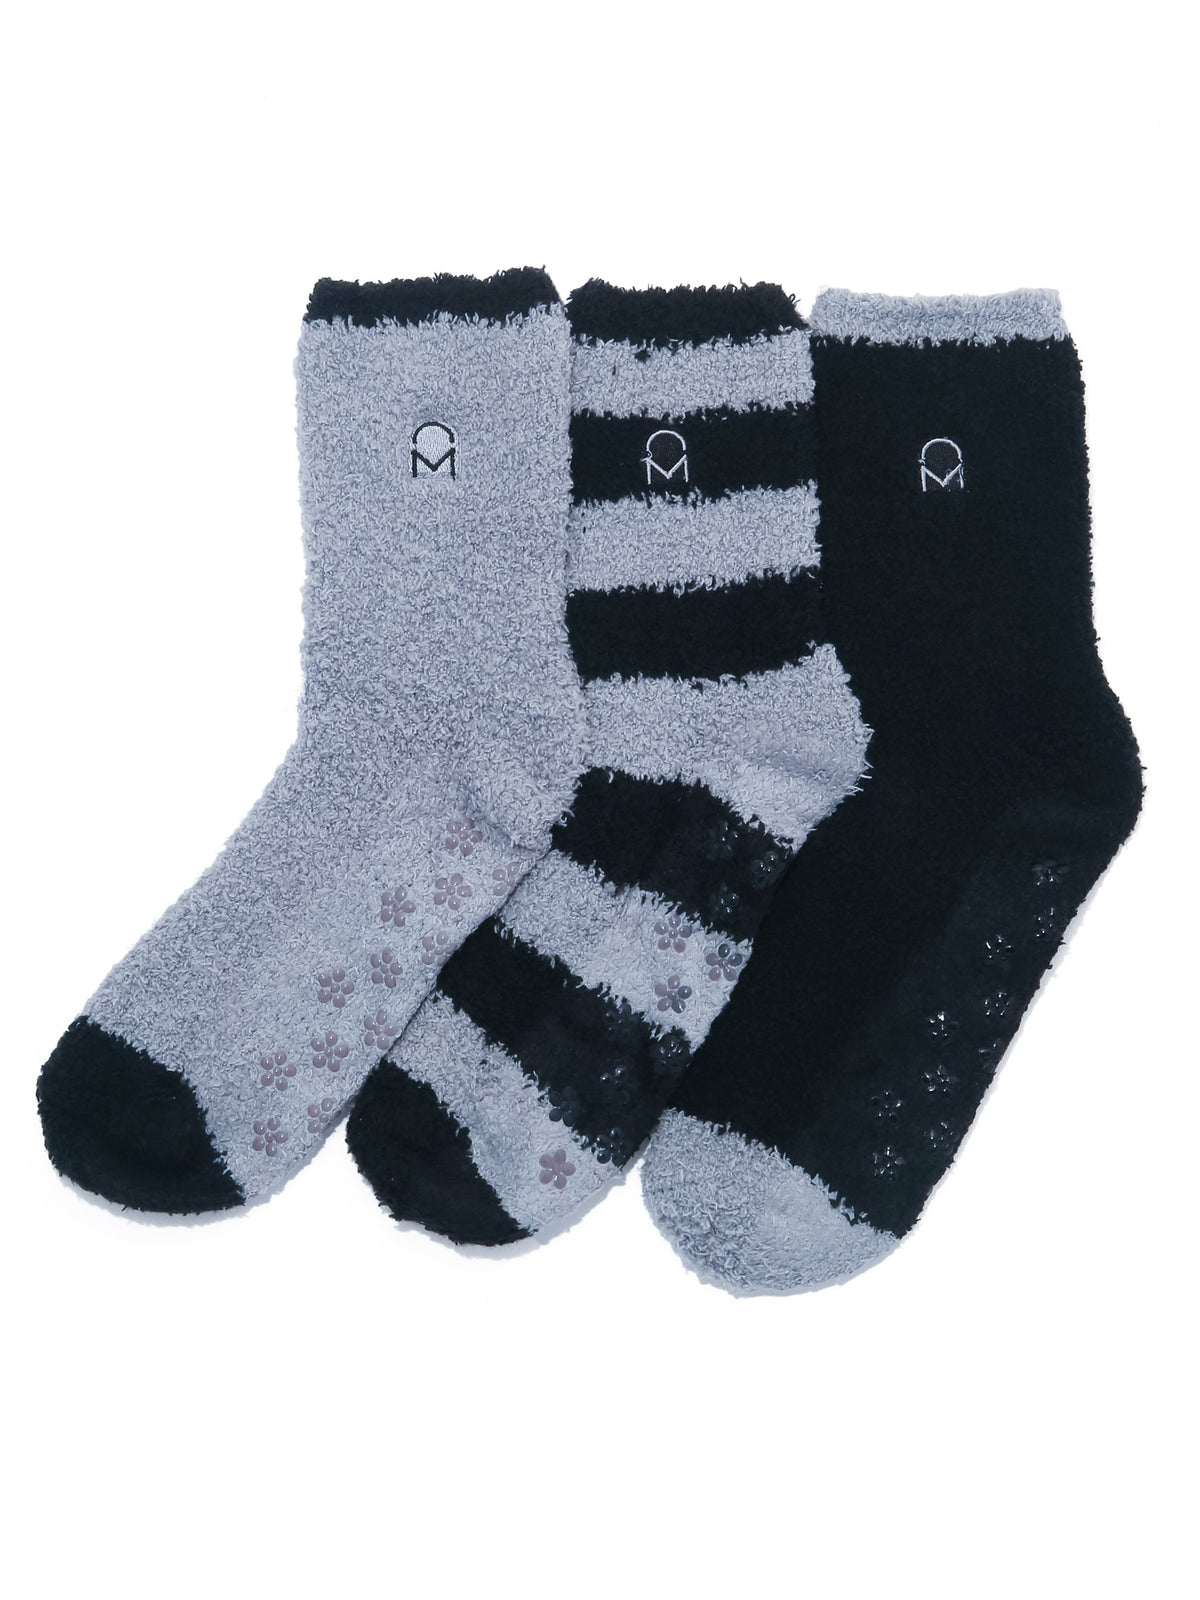 Women's (3 Pairs) Soft Anti-Skid Fuzzy Winter Crew Socks - Set D19